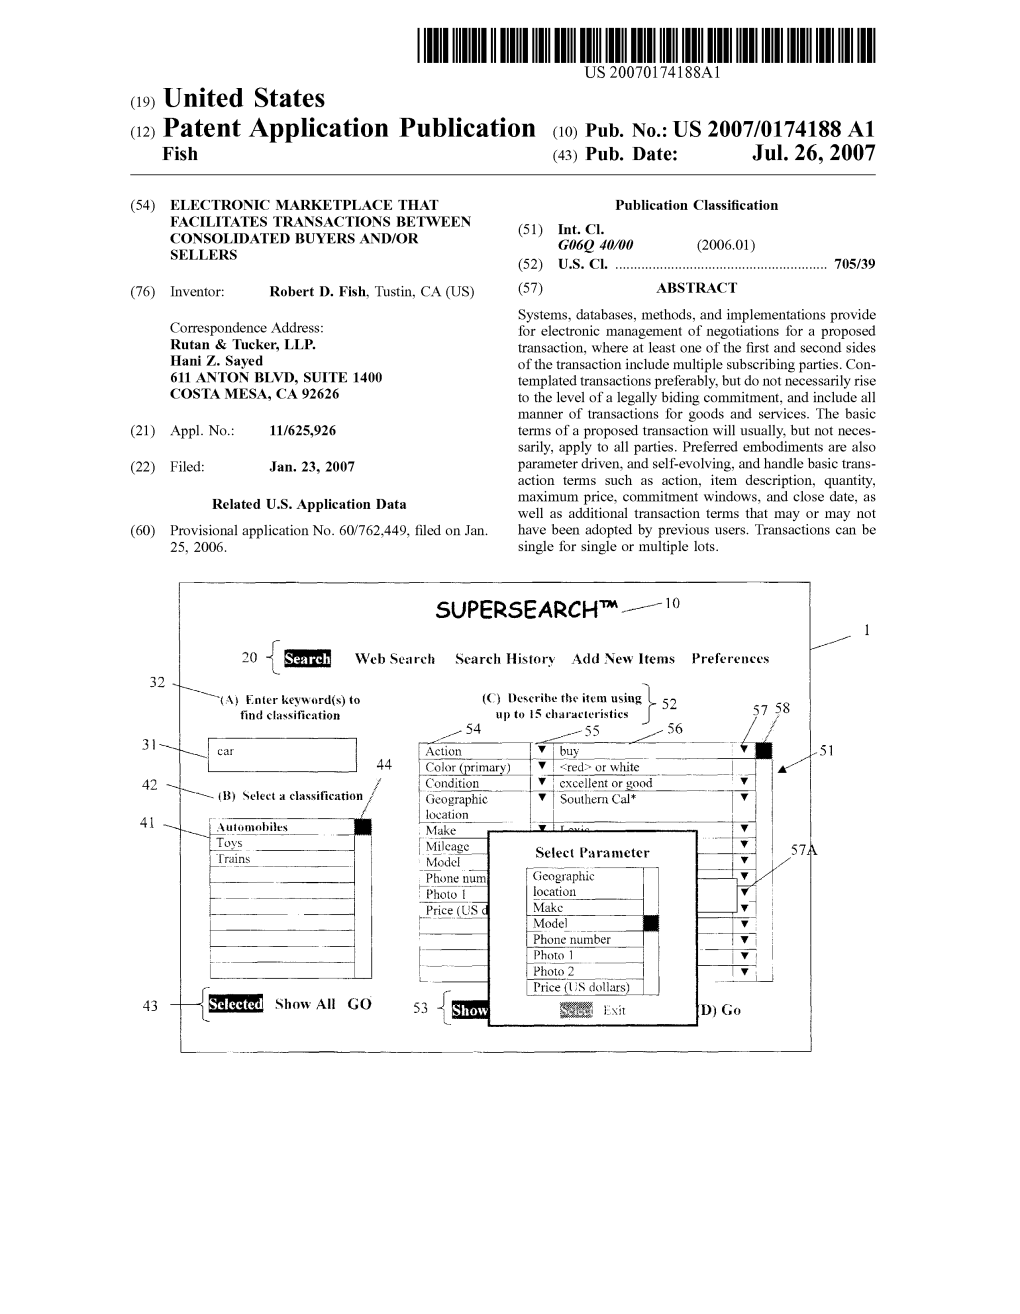 (12) Patent Application Publication (10) Pub. No.: US 2007/0174188 A1 Fish (43) Pub